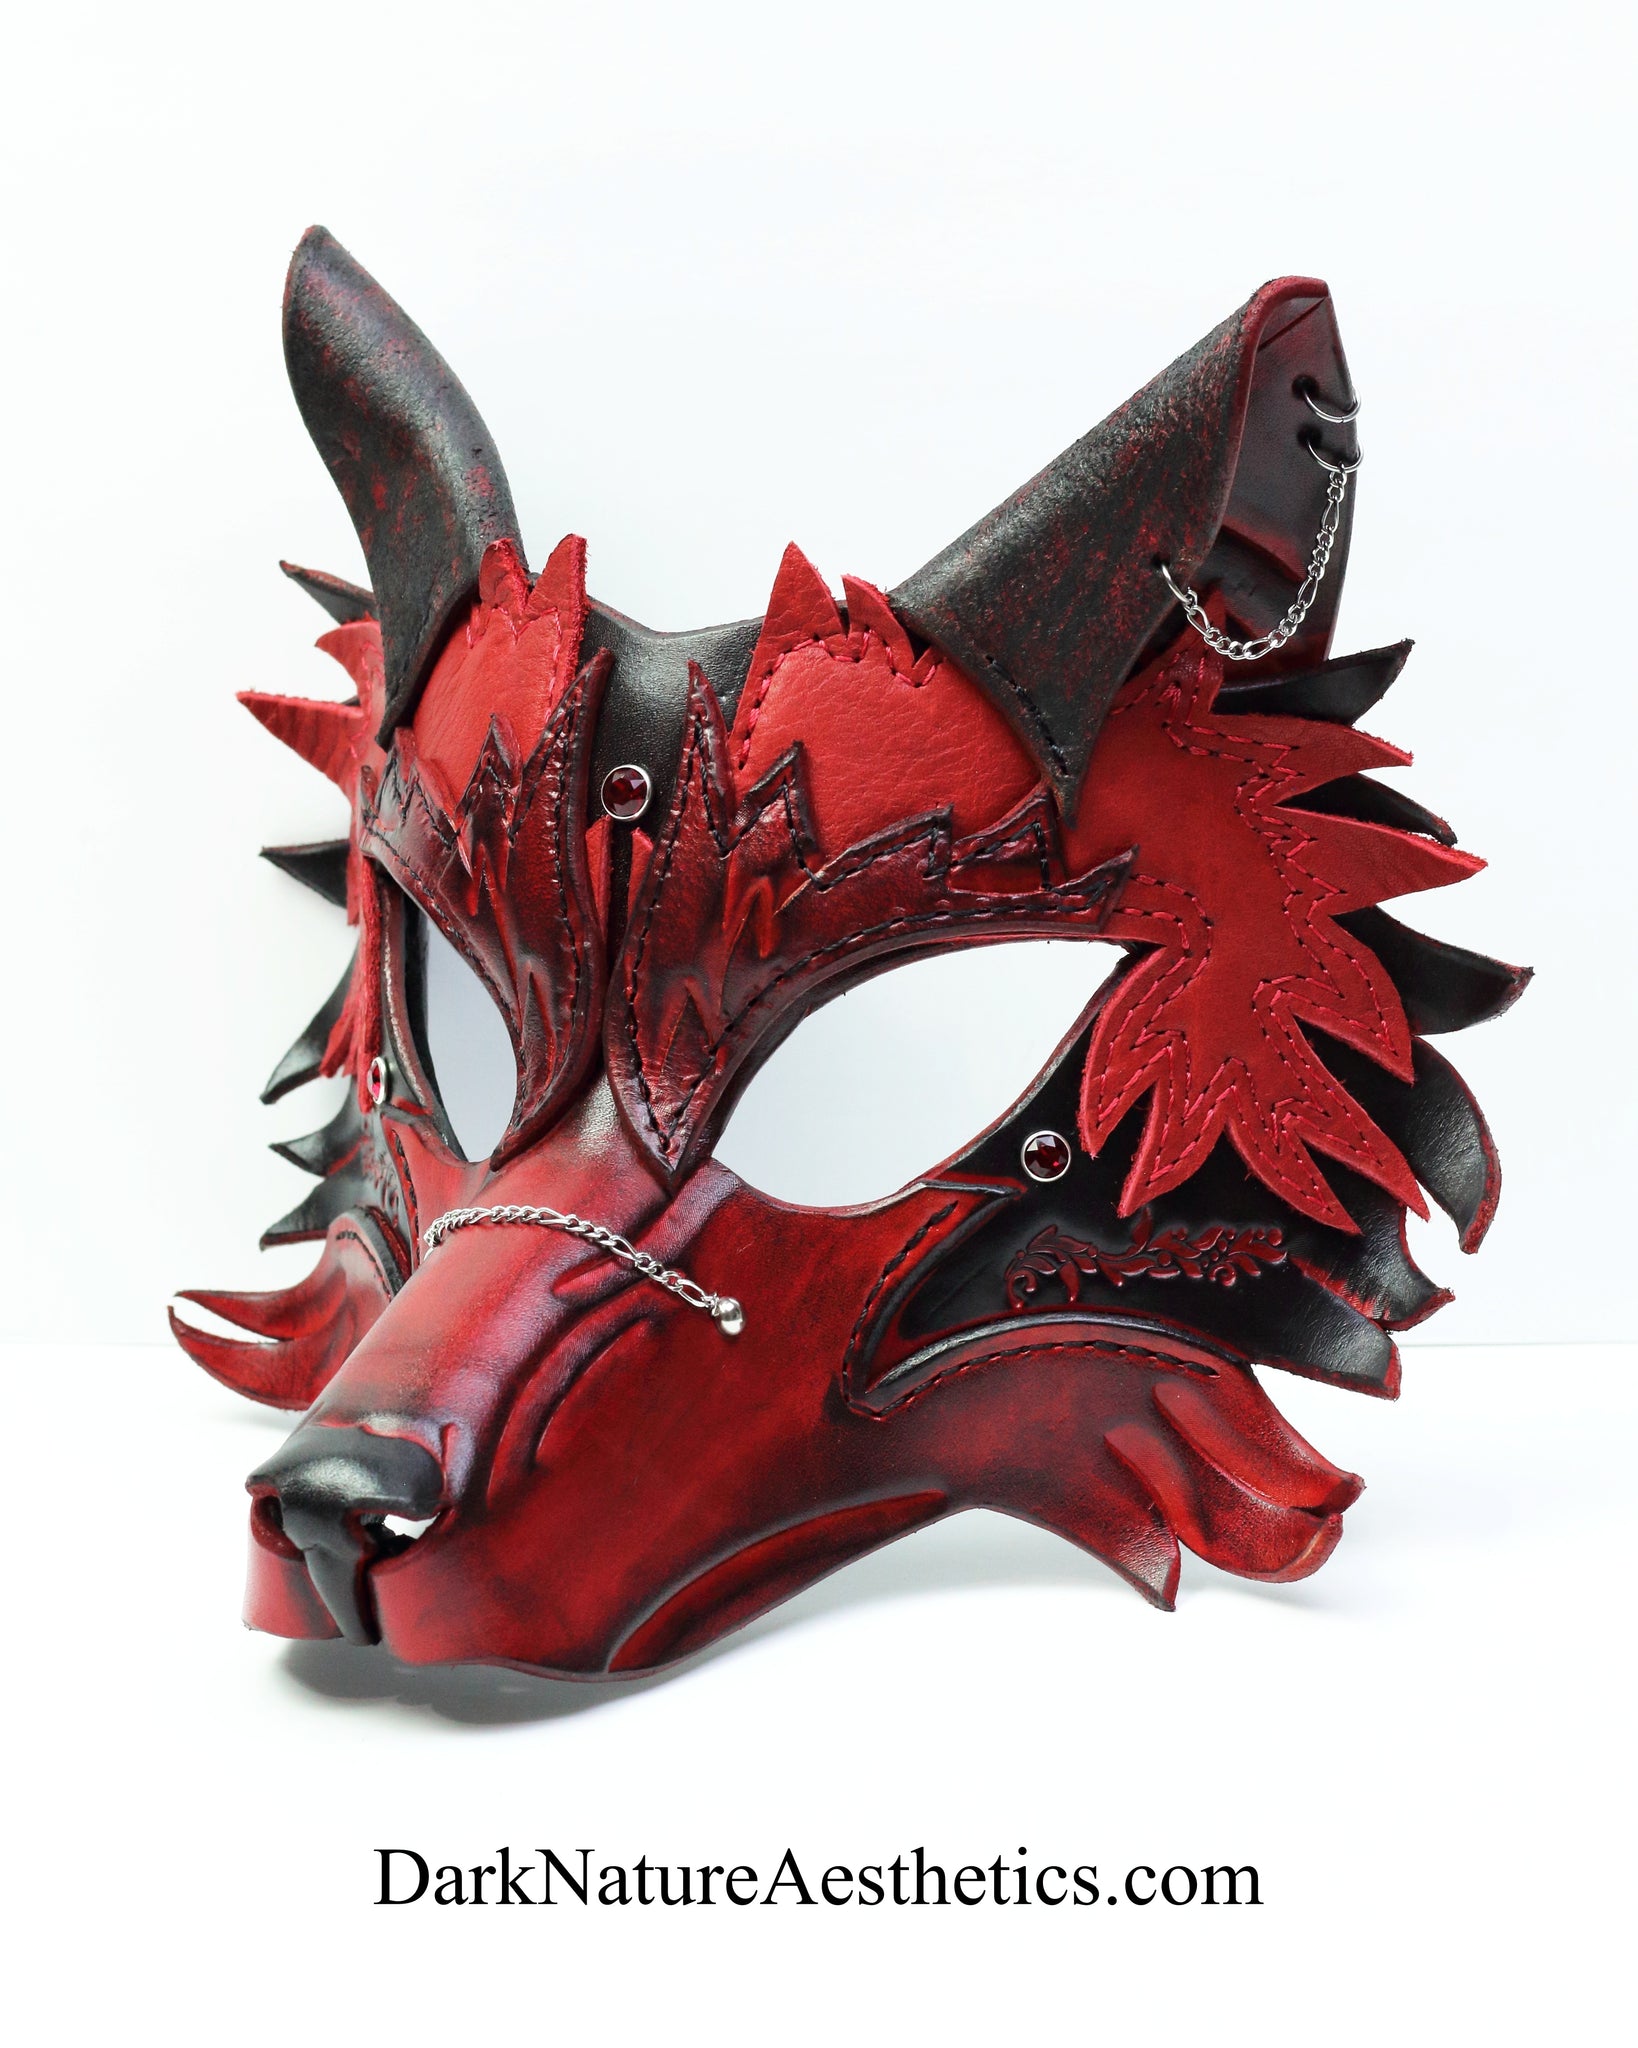 ernstig aan de andere kant, Lam Red "Helldog" Wolf Leather Mask/Hood – Dark Nature Aesthetics